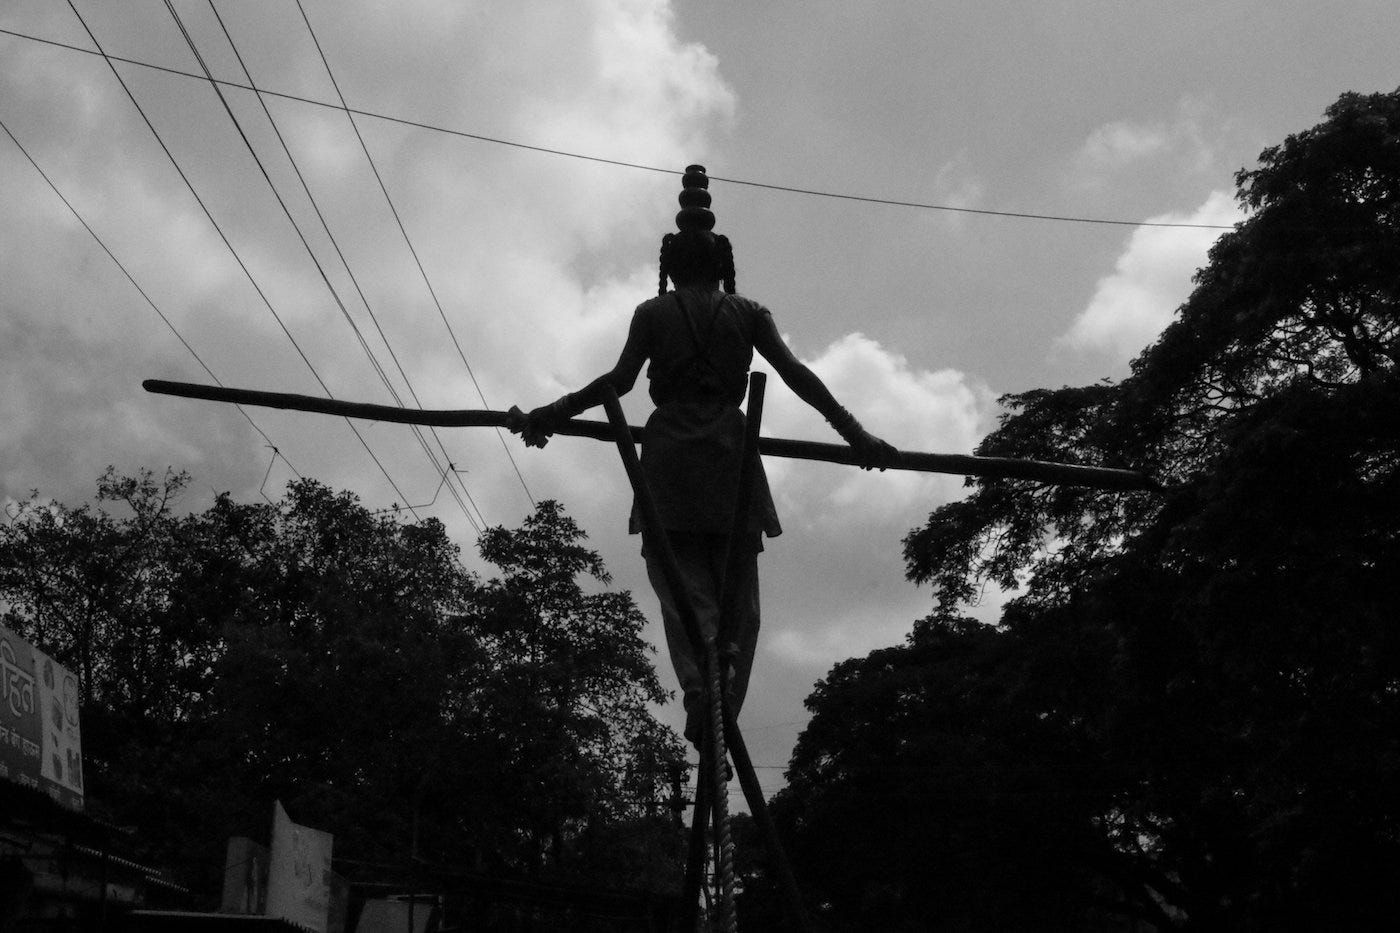 Walking a livelihood tightrope – literally